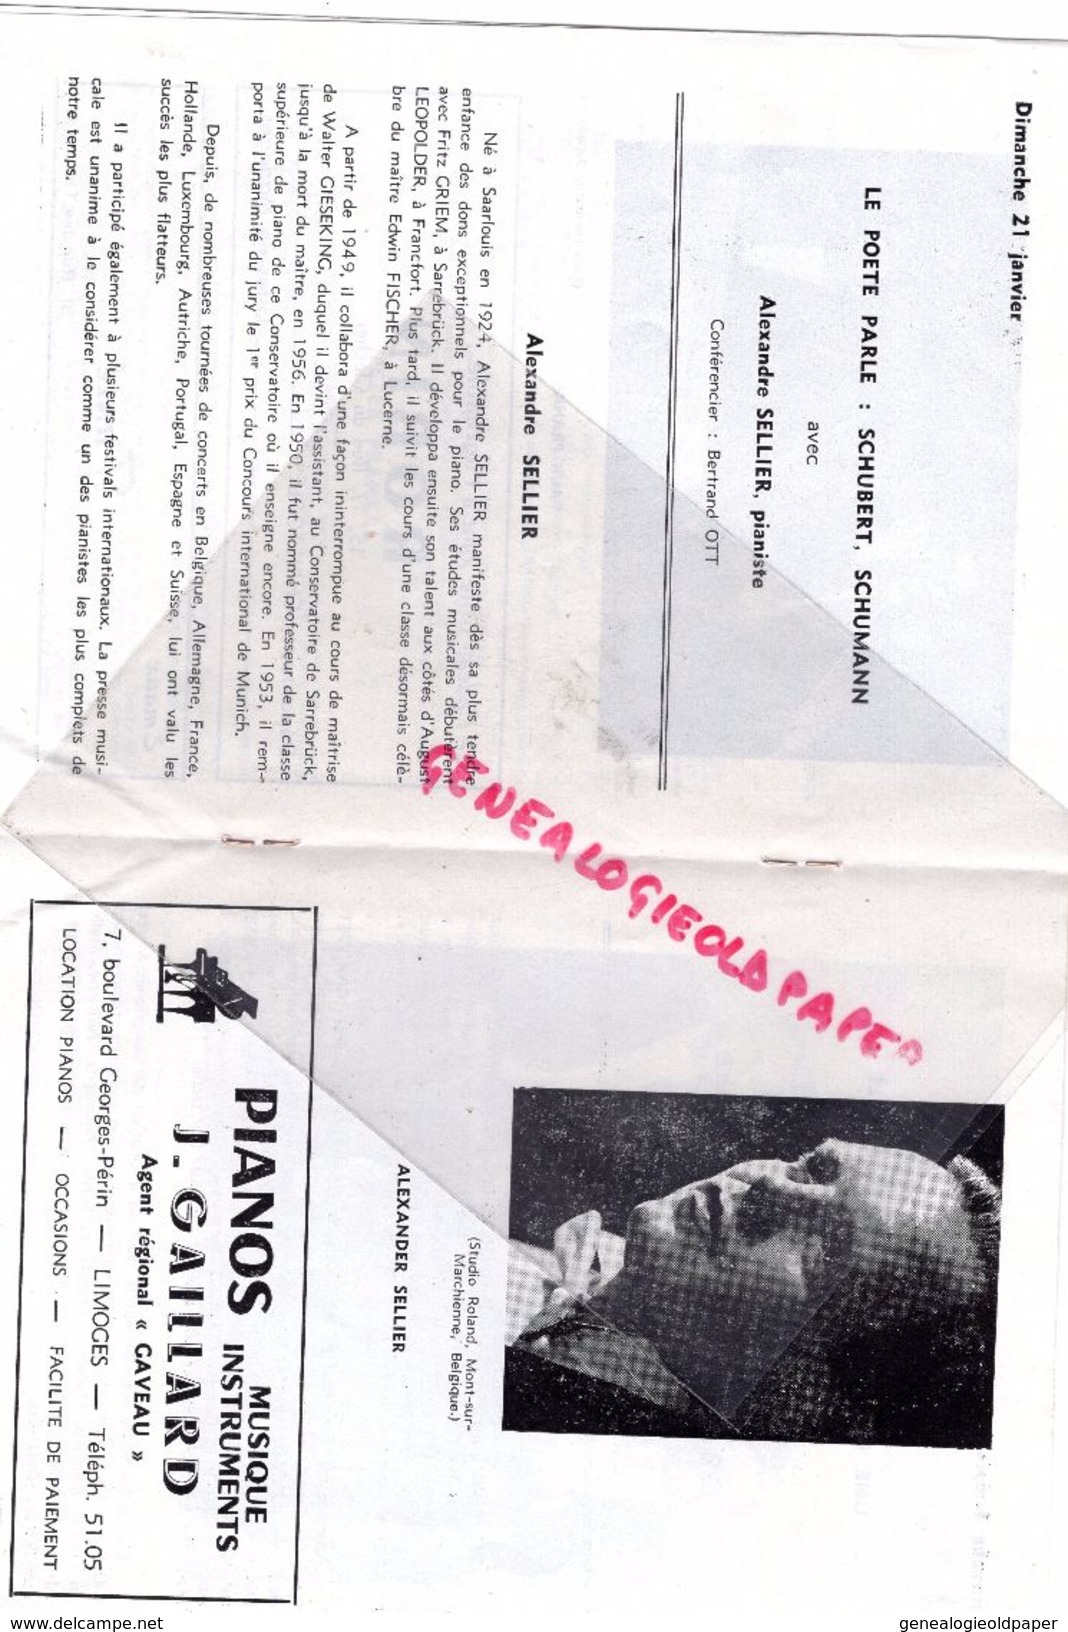 87 -LIMOGES-PROGRAMME JEUNESSES MUSICALES DE FRANCE-1961-1962-RENE NICOLY-DANIEL MARTY-GISELE PREVET-OPERA KOSMA-BAUDO - Programmes